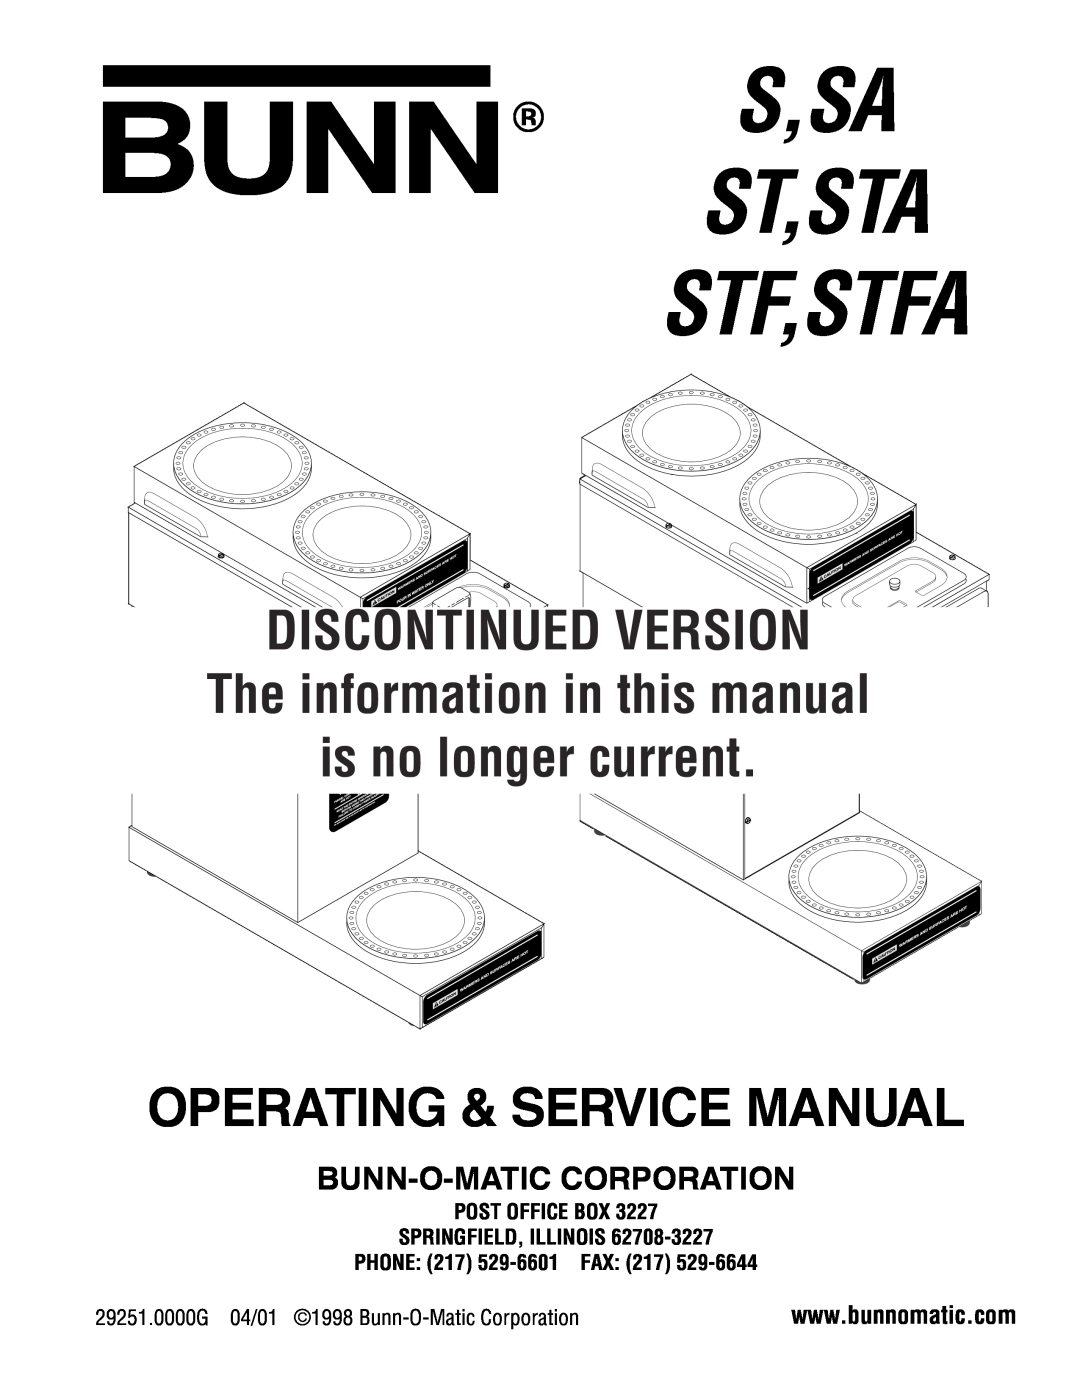 Bunn STA, STF service manual Post Office Box Springfield, Illinois, Fax, Bunn S,Sa, St,Sta Stf,Stfa, is no longer current 